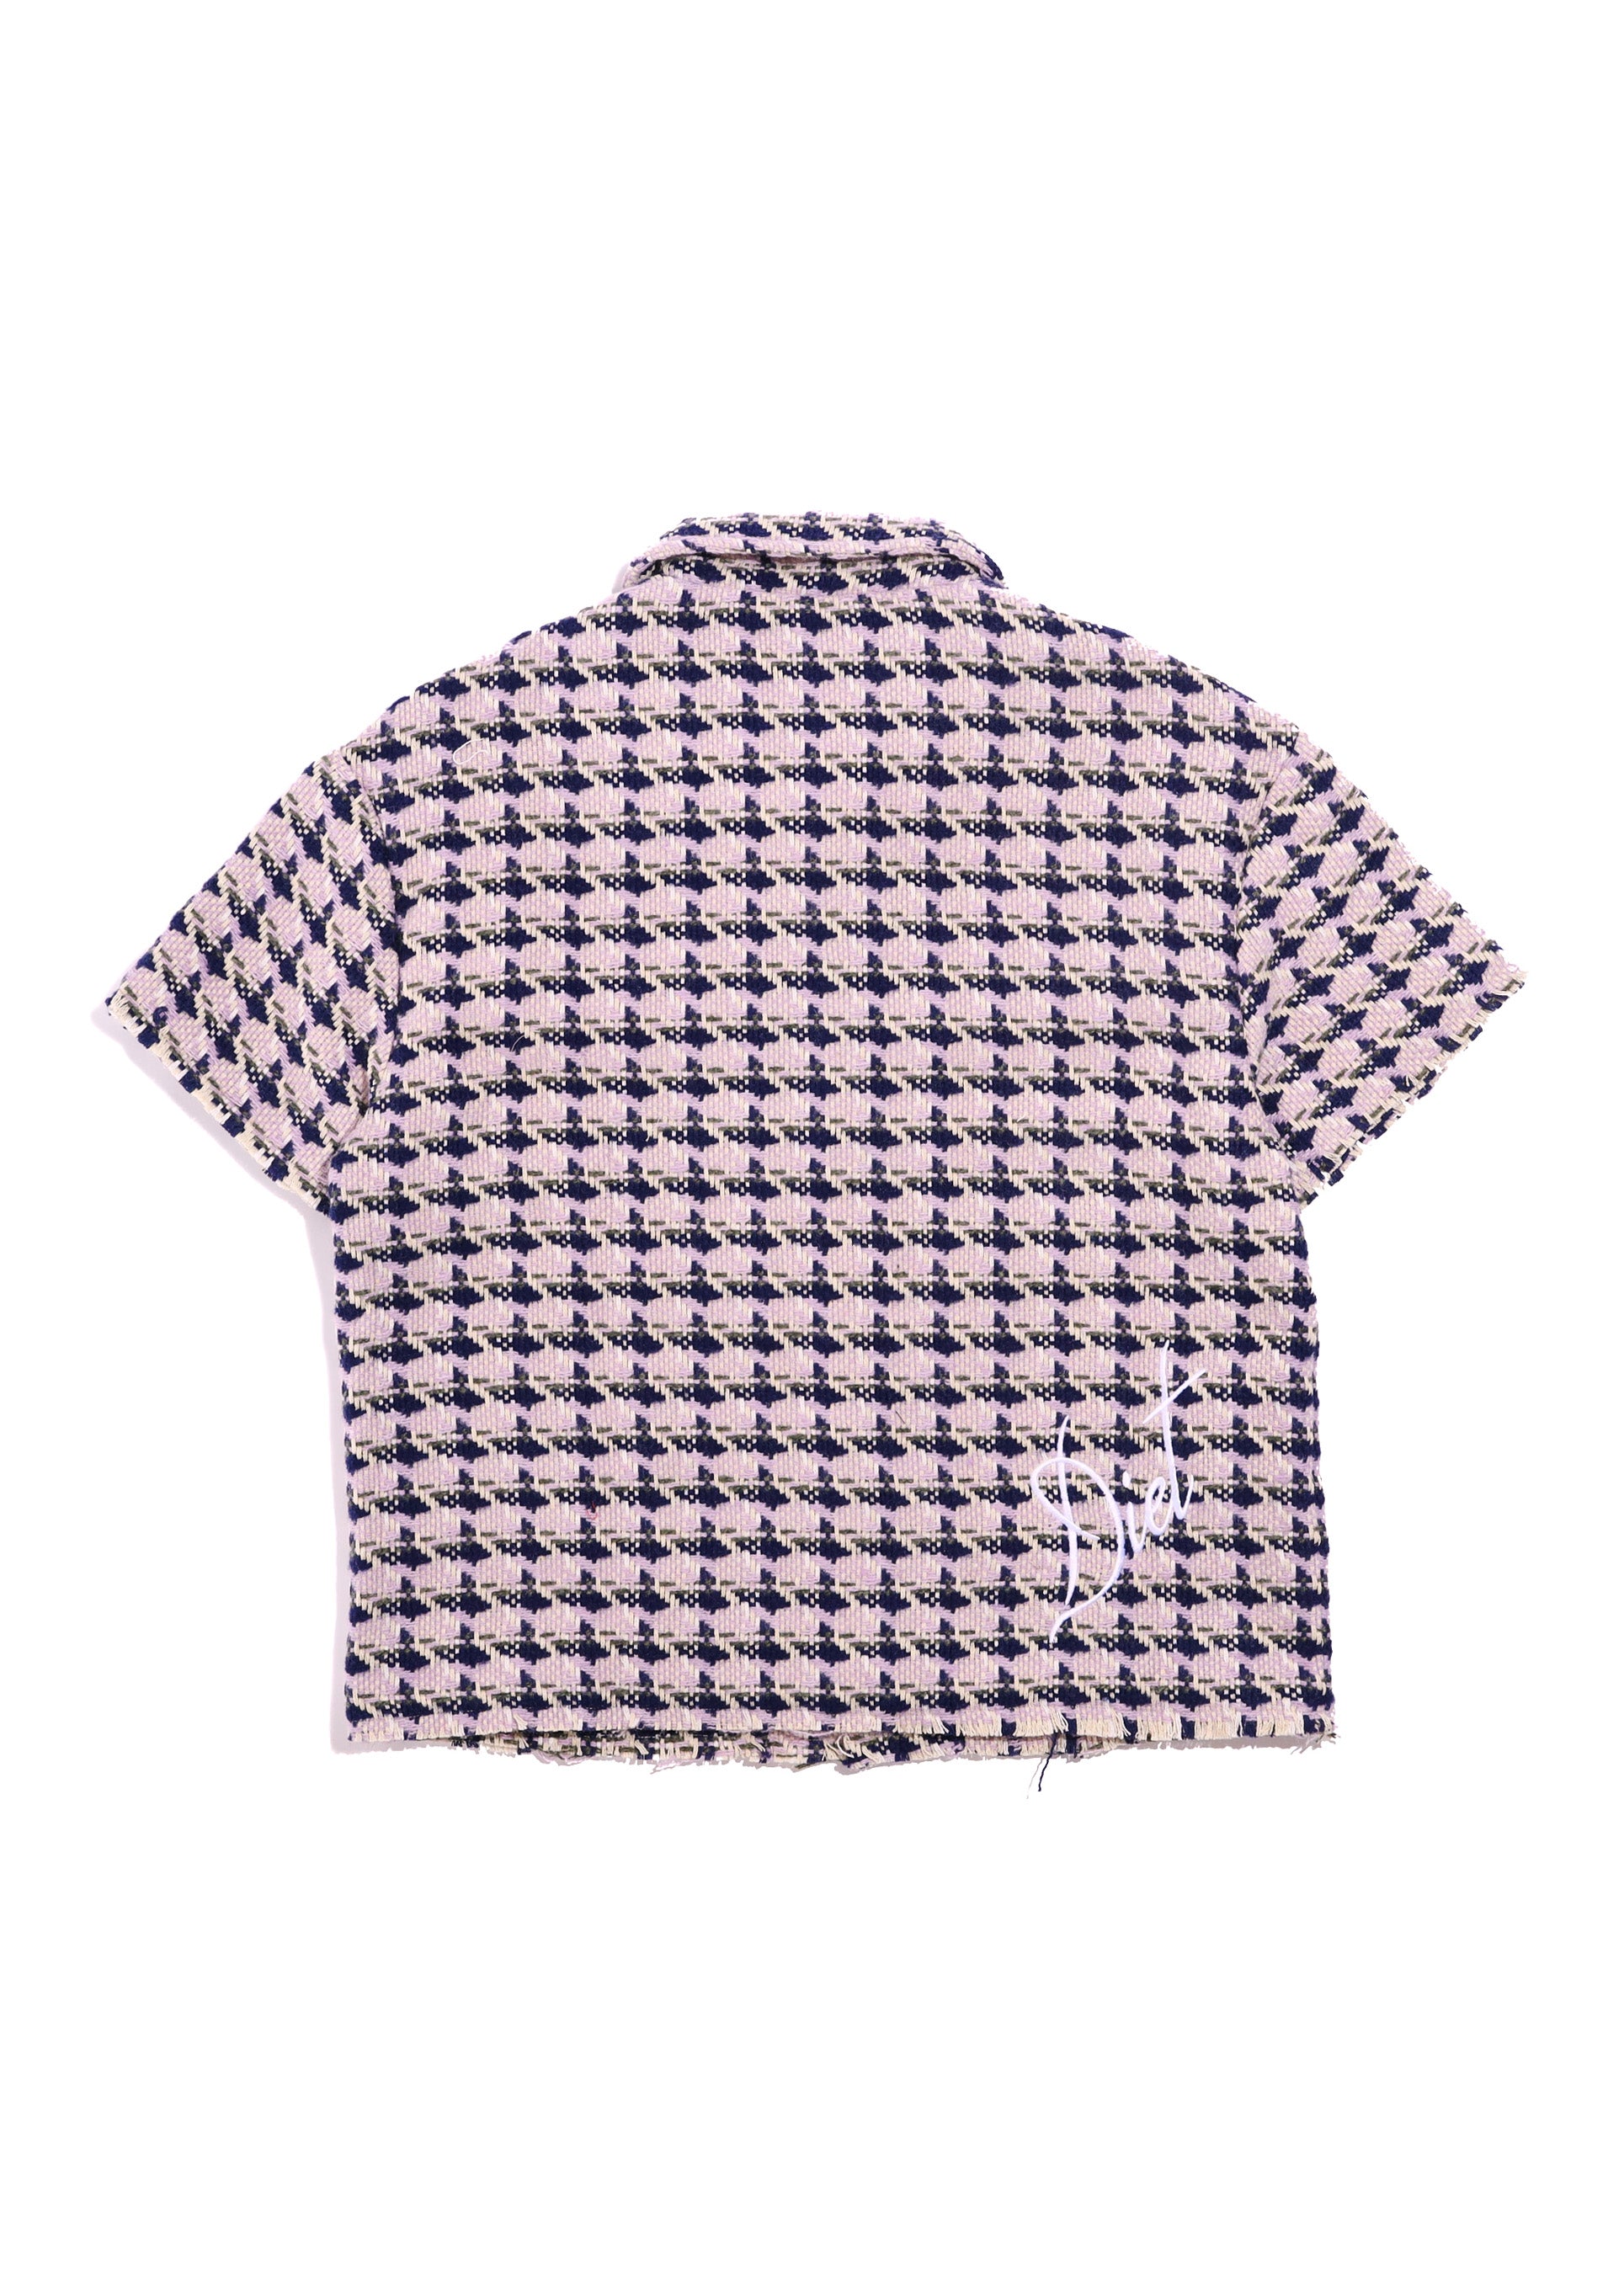 Tweed Button Up - Purple